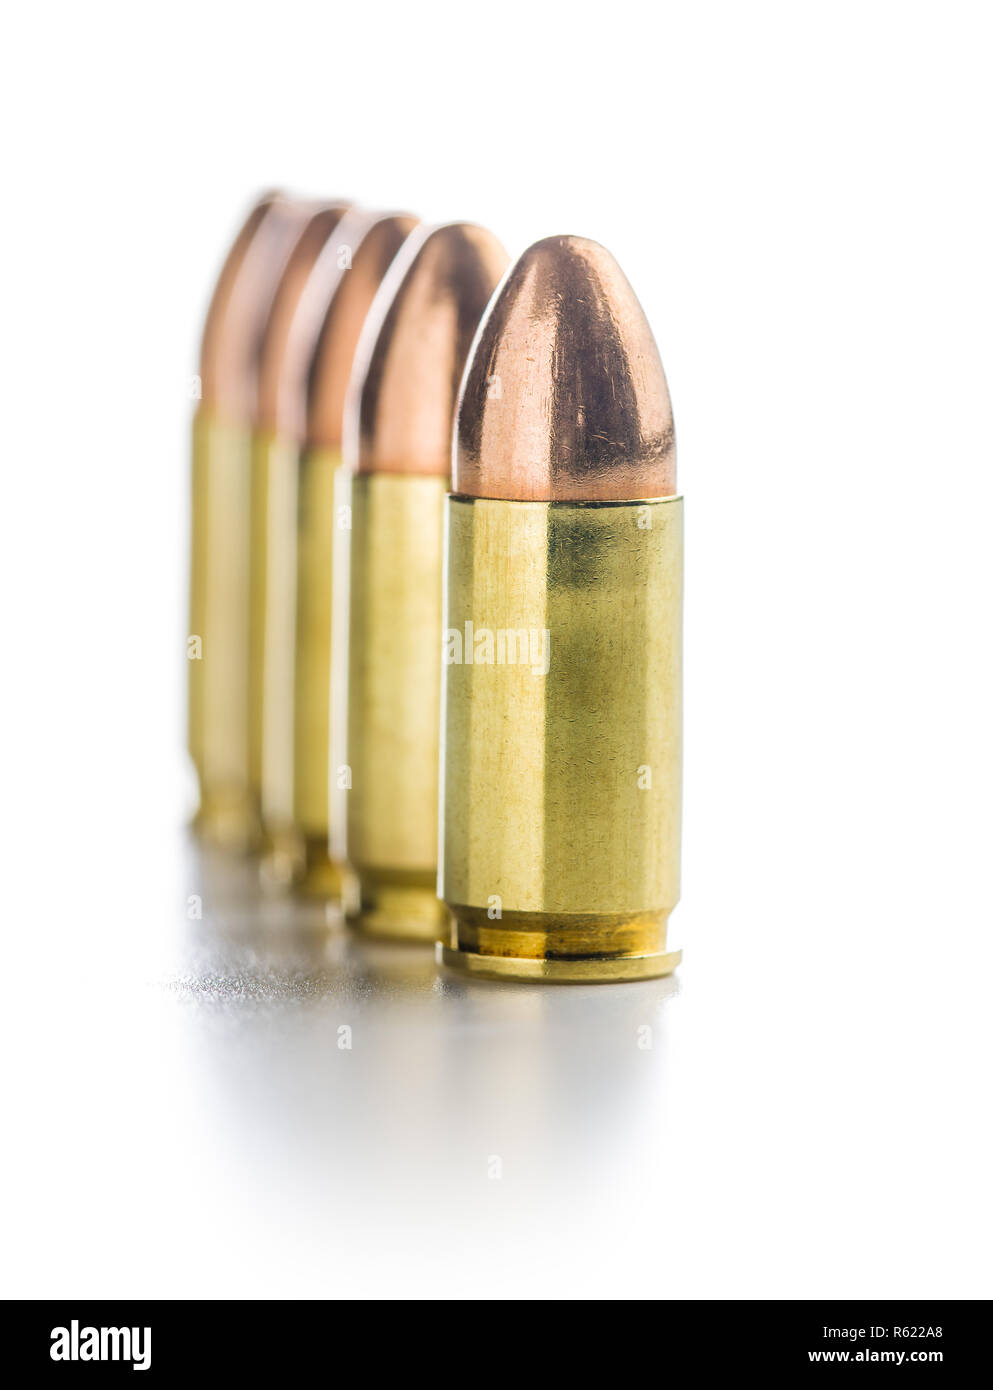 9mm balle de pistolet Photo Stock - Alamy